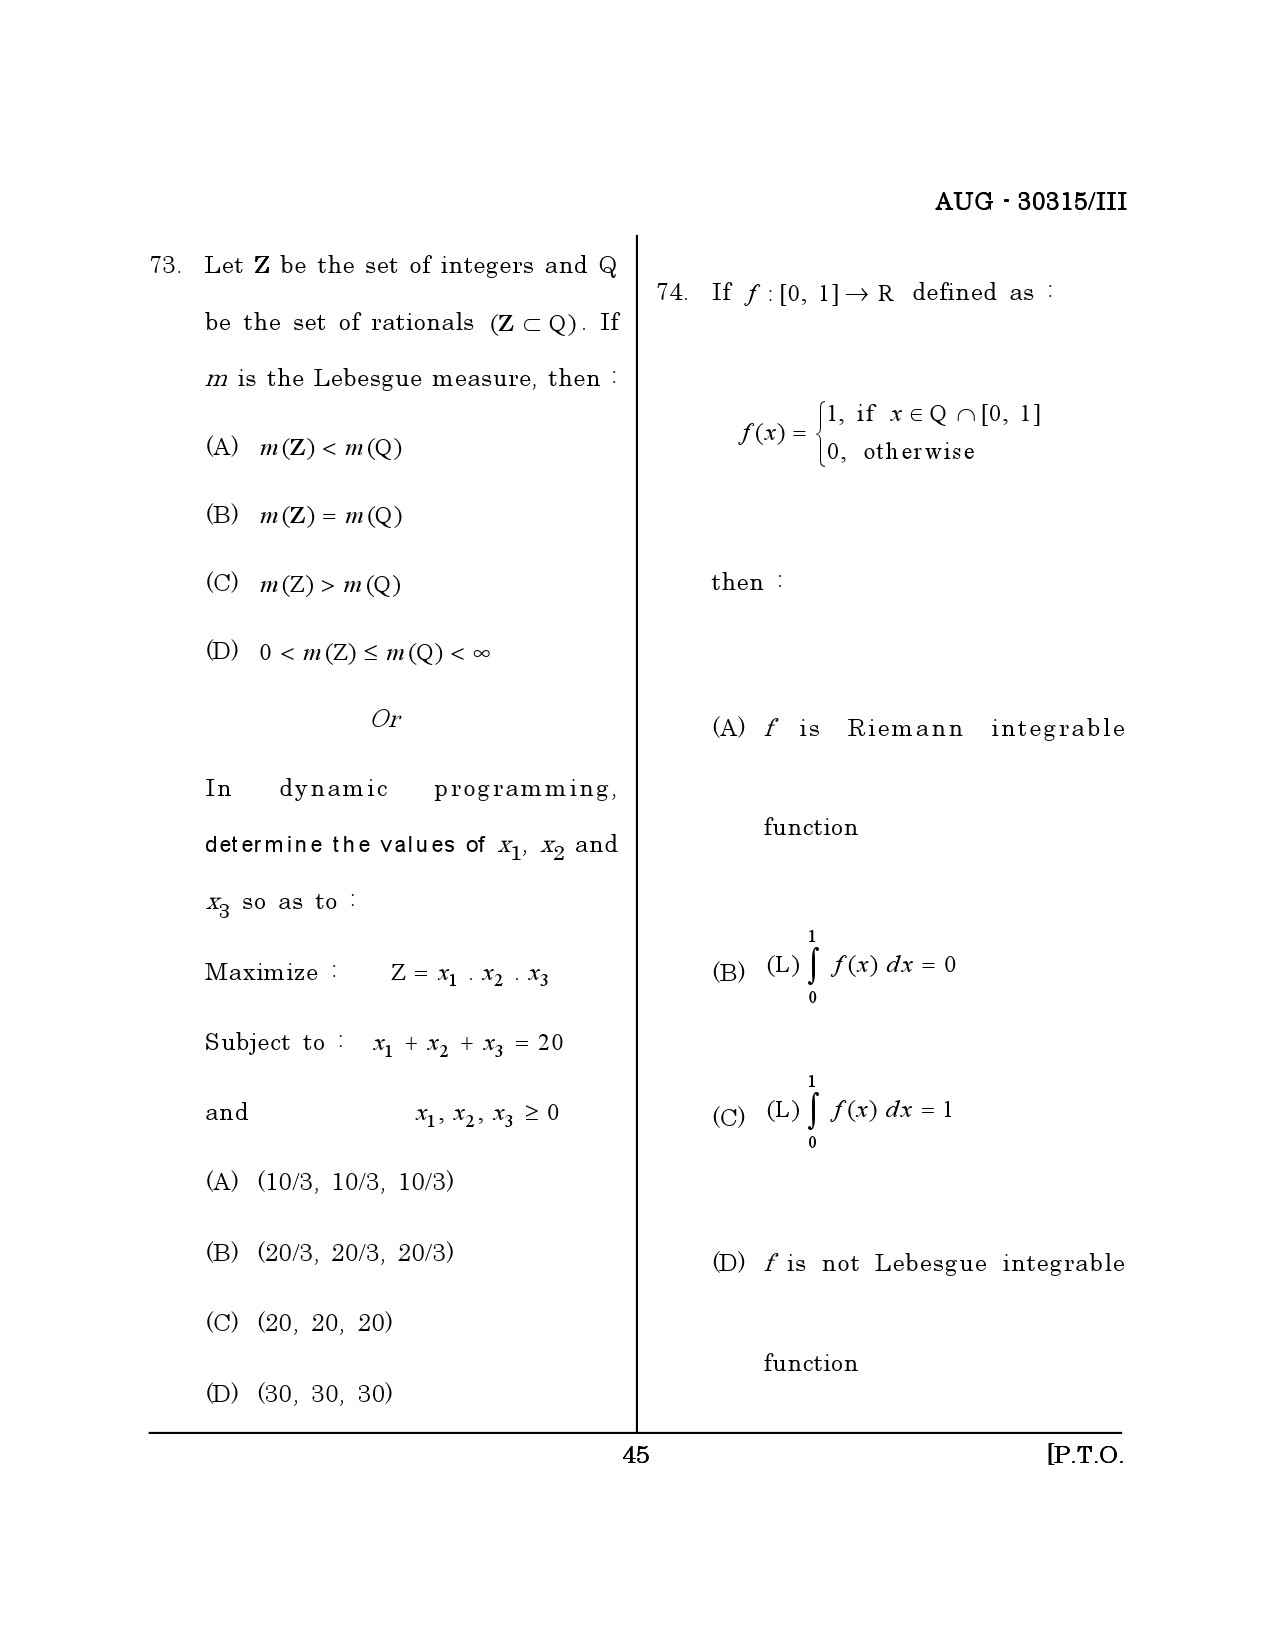 Maharashtra SET Mathematical Sciences Question Paper III August 2015 44